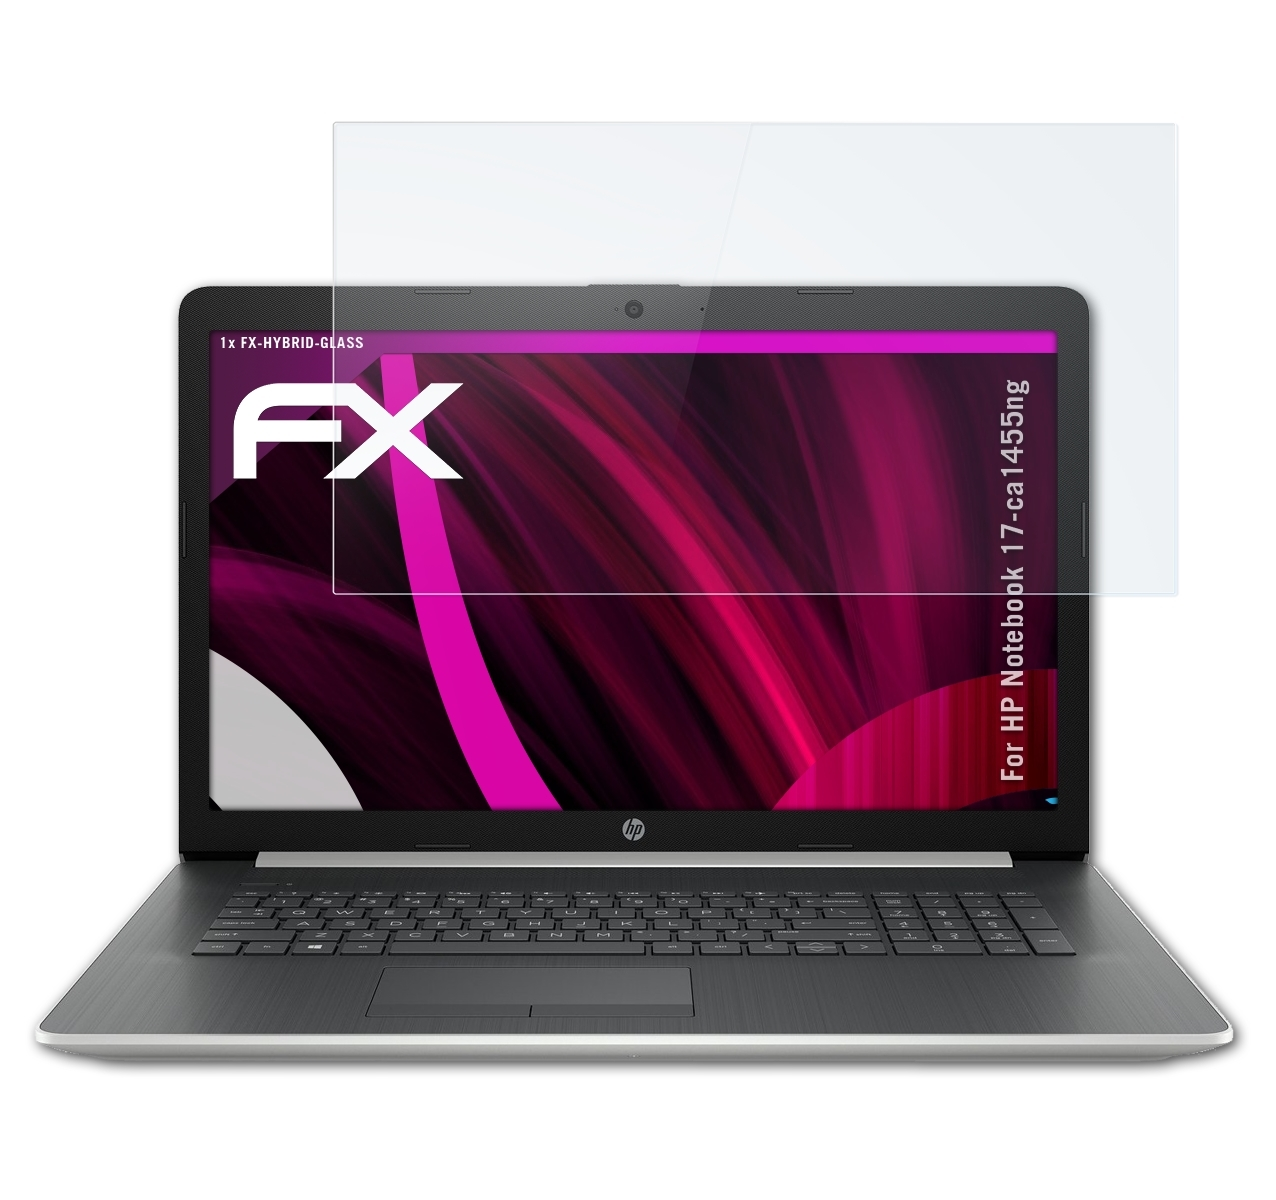 17-ca1455ng) HP FX-Hybrid-Glass Notebook Schutzglas(für ATFOLIX